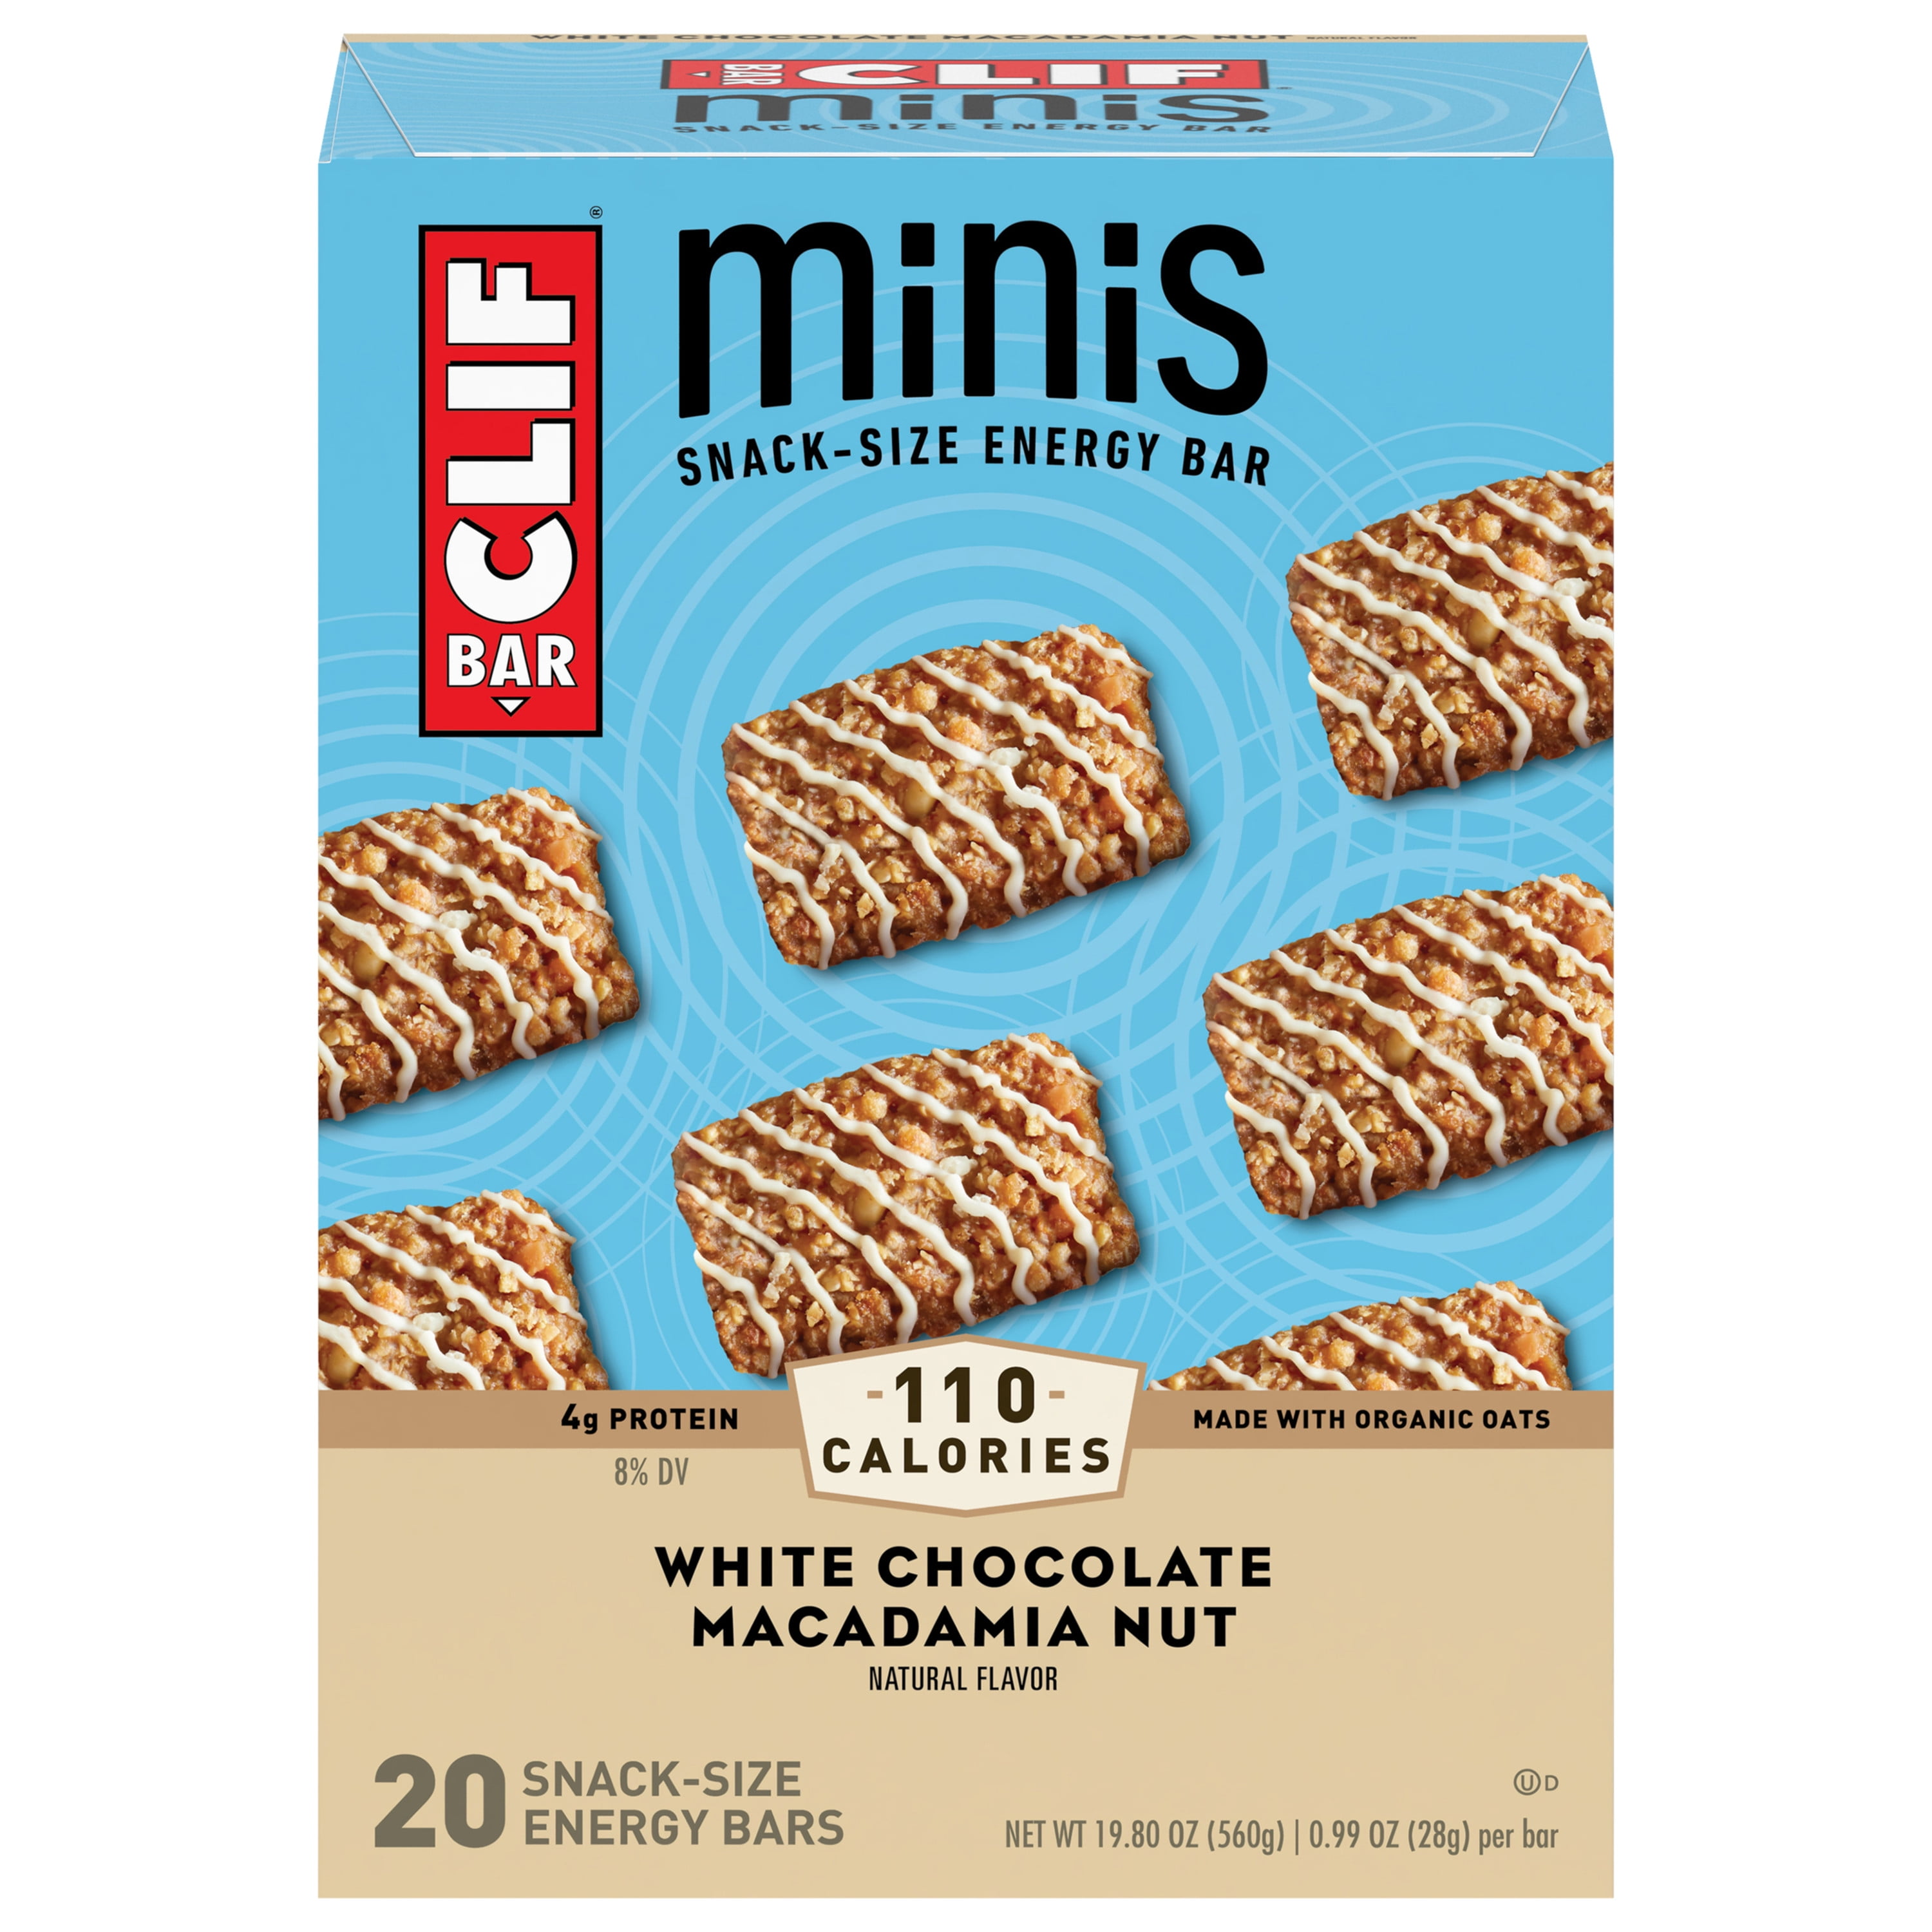 Clif Bar Minis Energy Bars, White Chocolate Macadamia Nut, 4g Protein Bar, 20 Ct, 0.99 oz